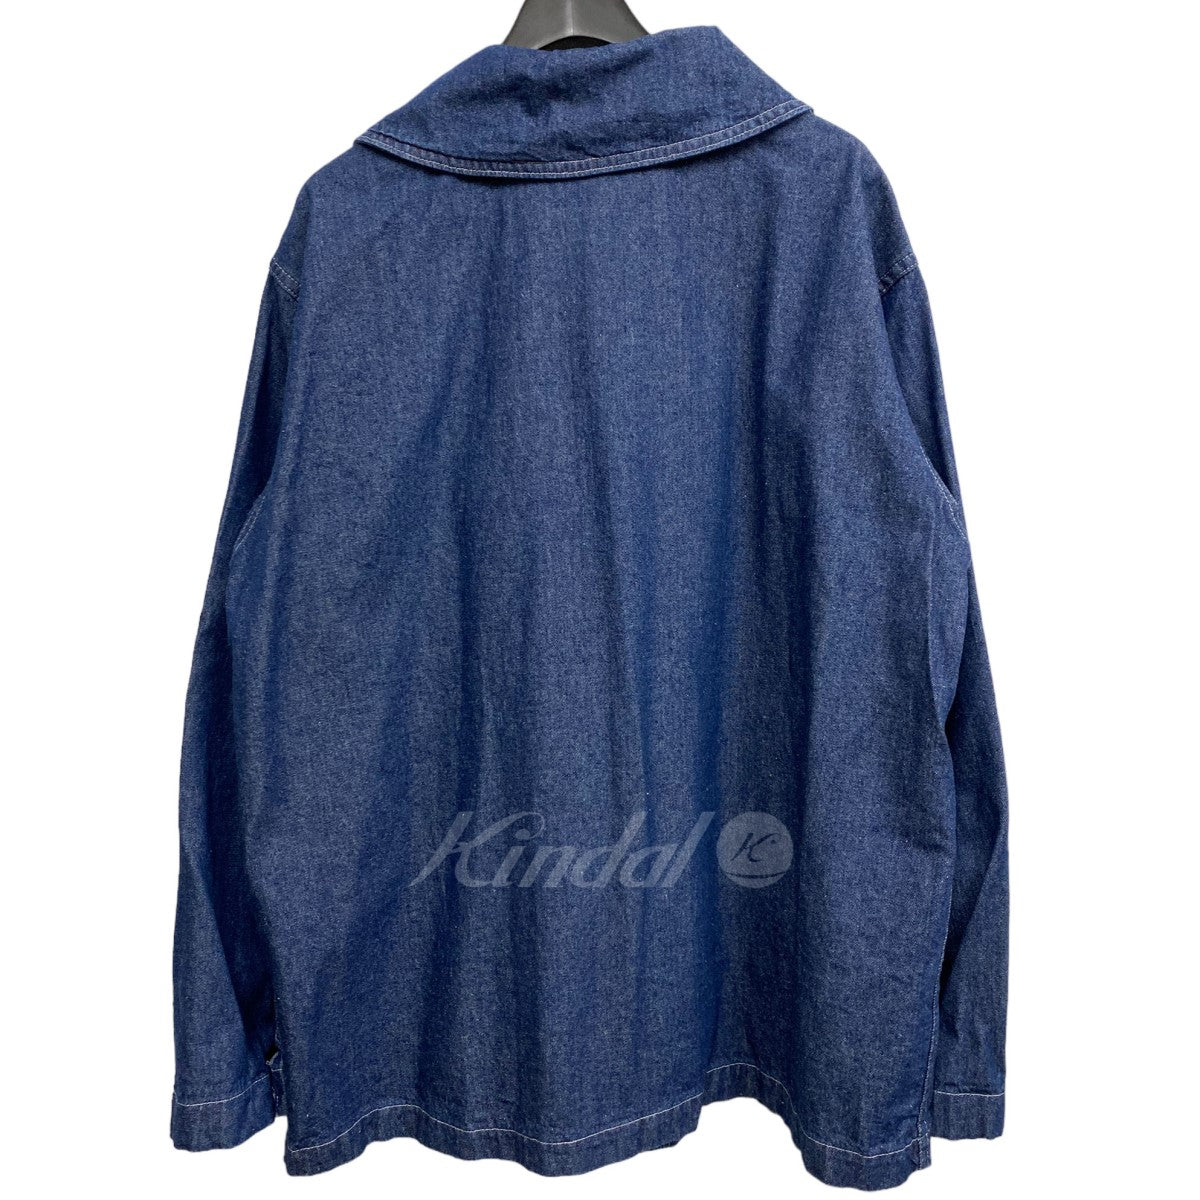 Engineered Garments(エンジニアードガーメンツ) Shawl Collar Utility jacket 8oz  denimショールカラーデニム